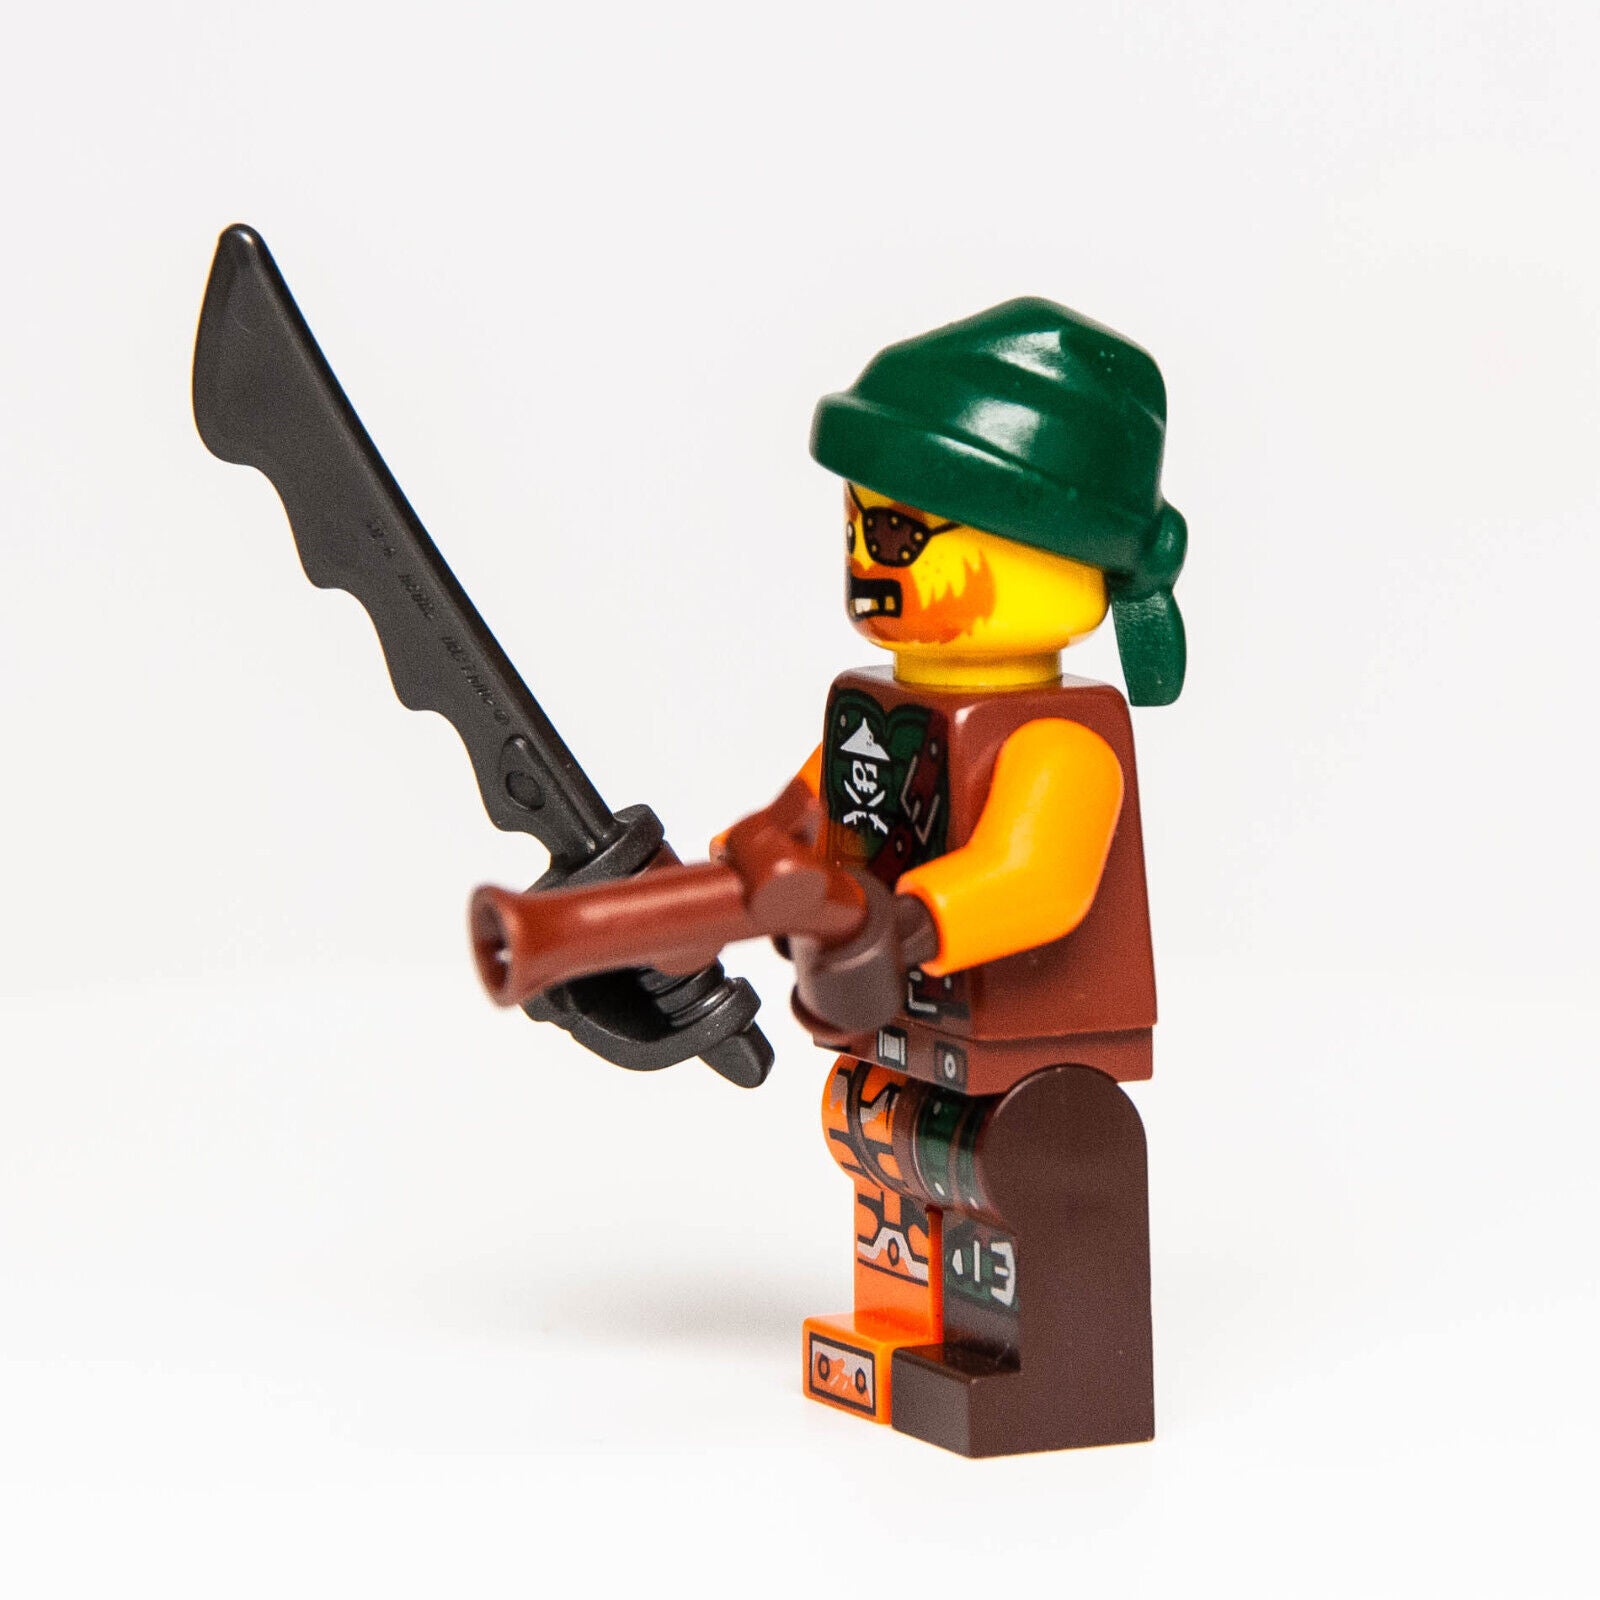 LEGO Ninjago Minifigure - Bucko (njo196) Skybound Pirate